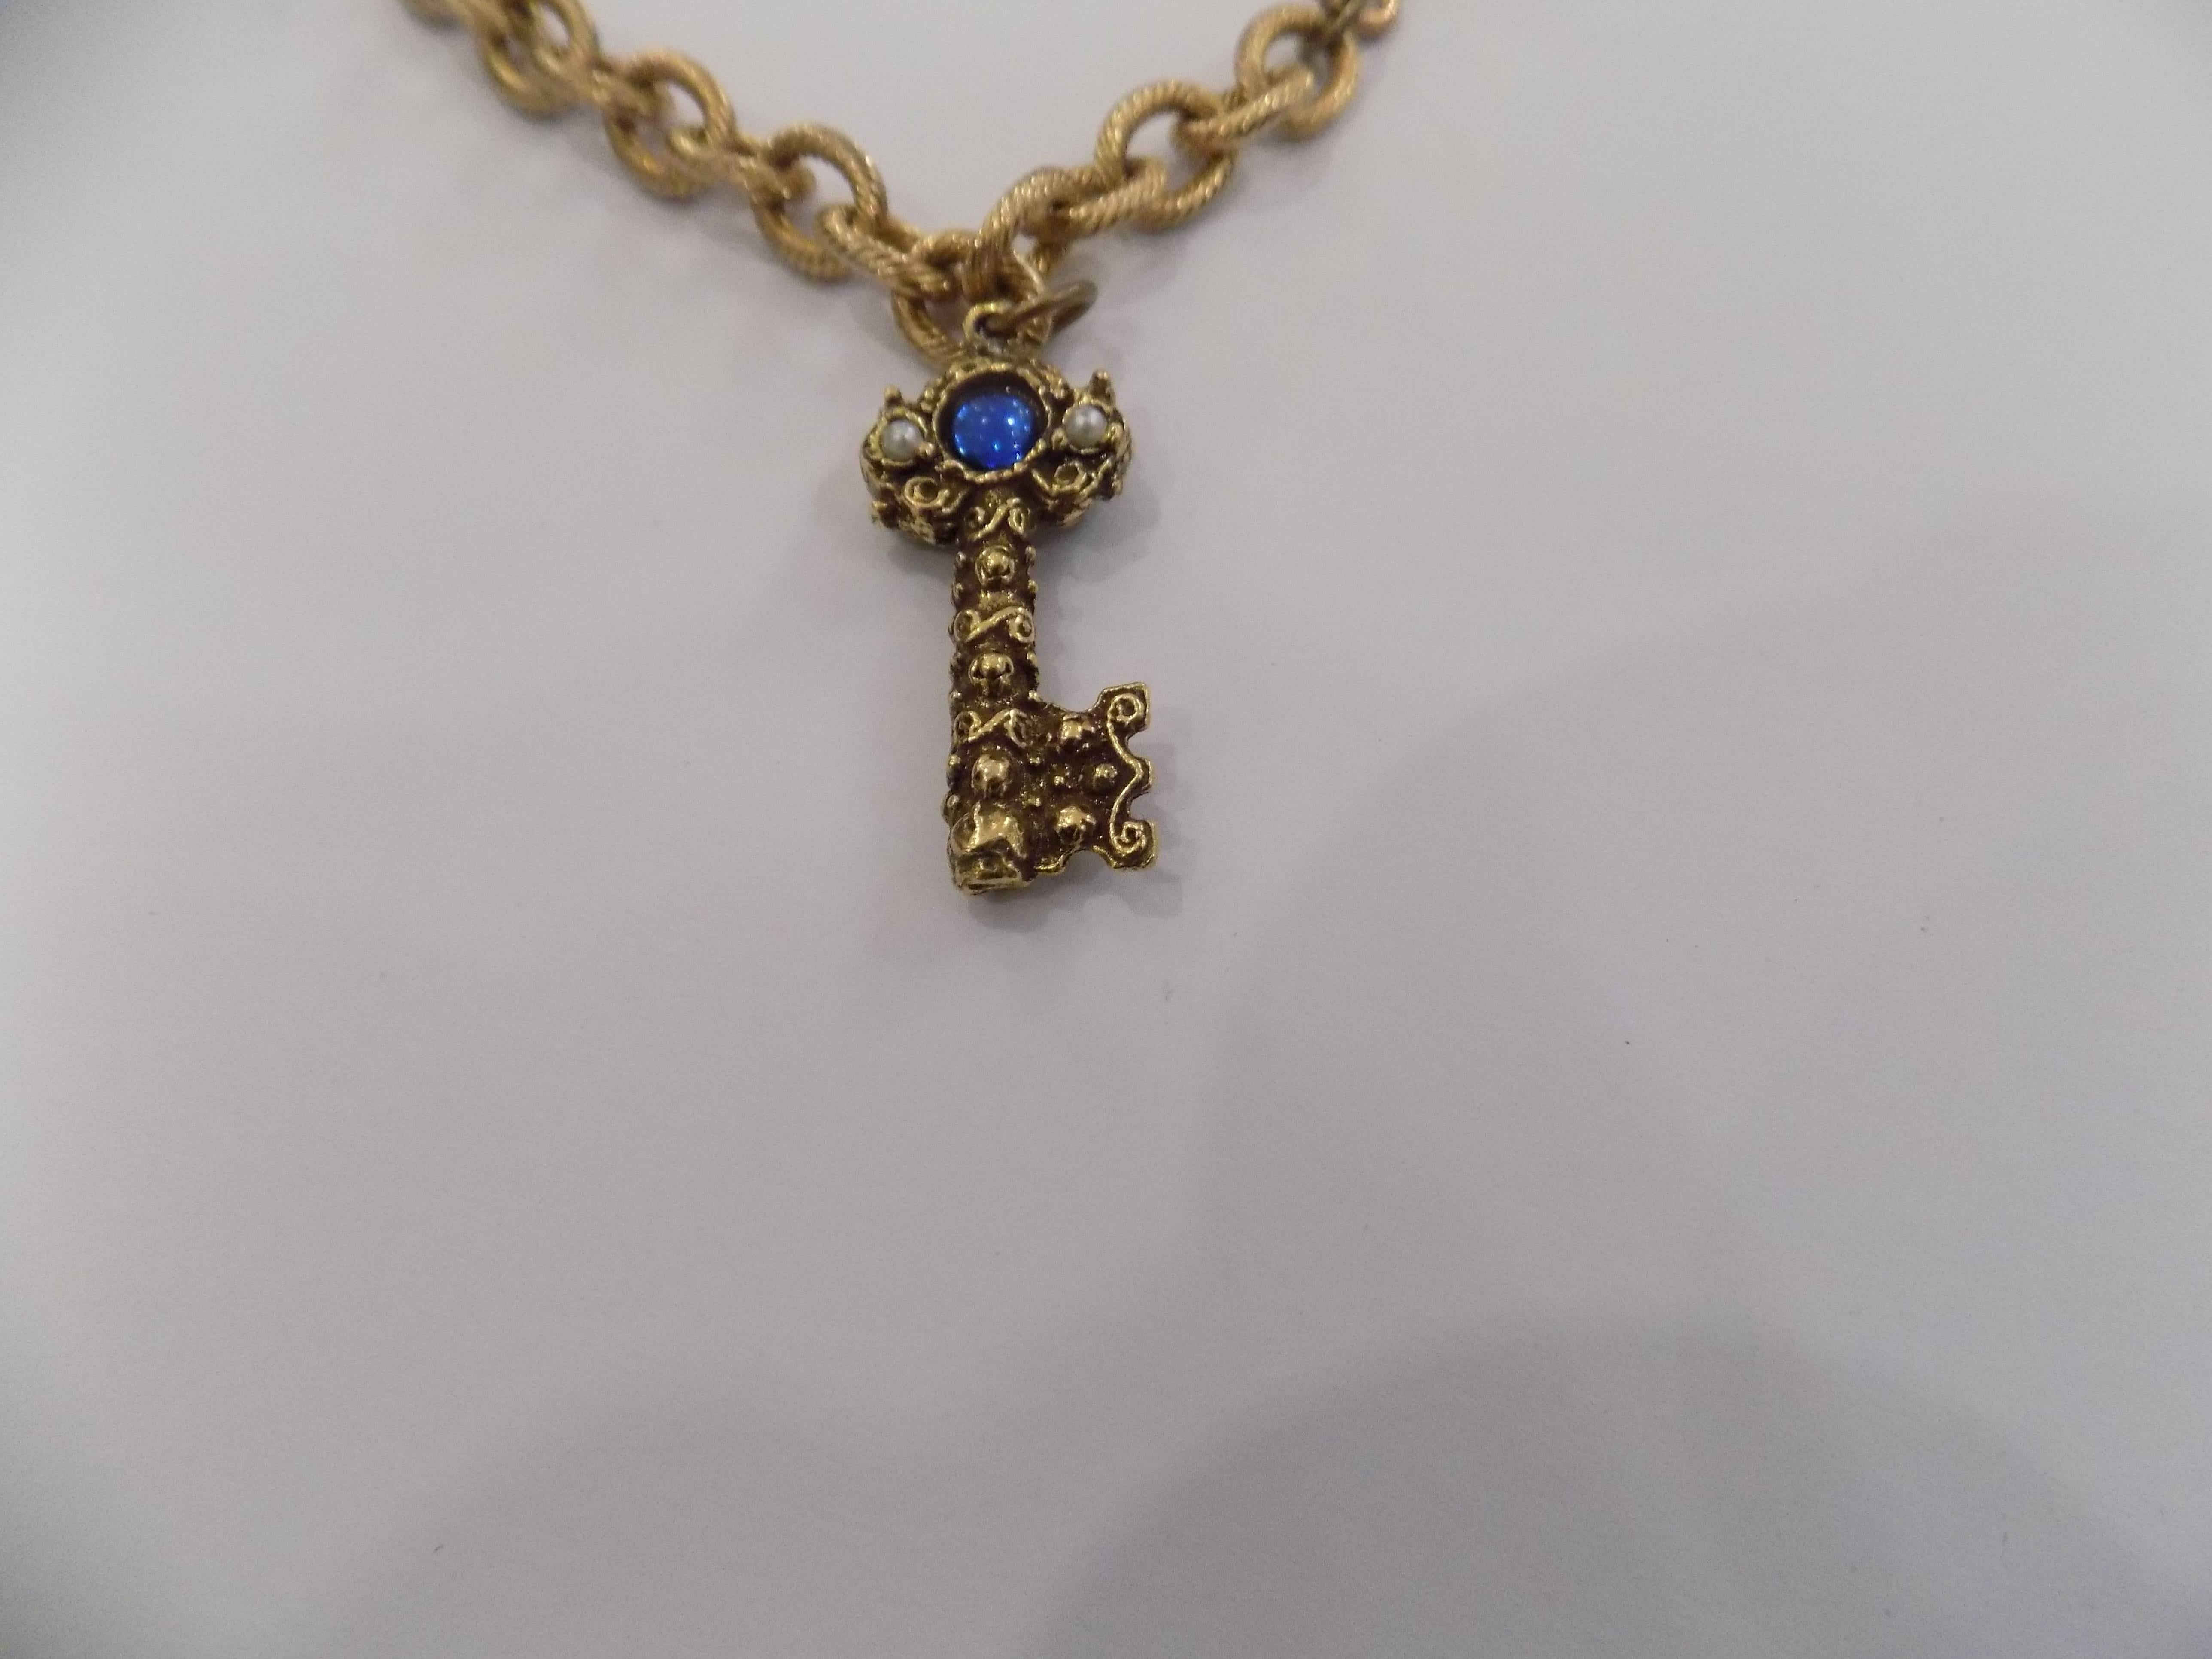 Vintage Gold tone Bracelet with pendant key